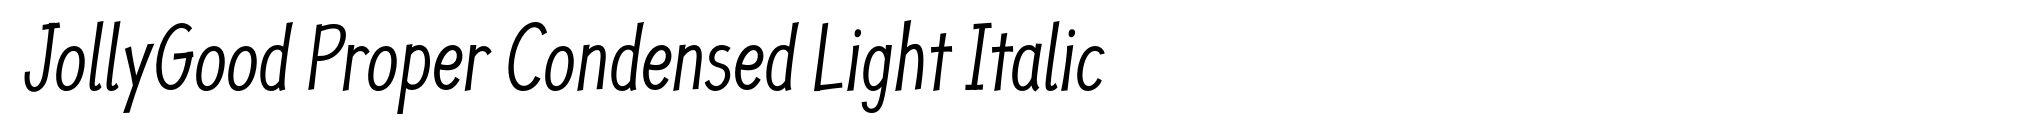 JollyGood Proper Condensed Light Italic image